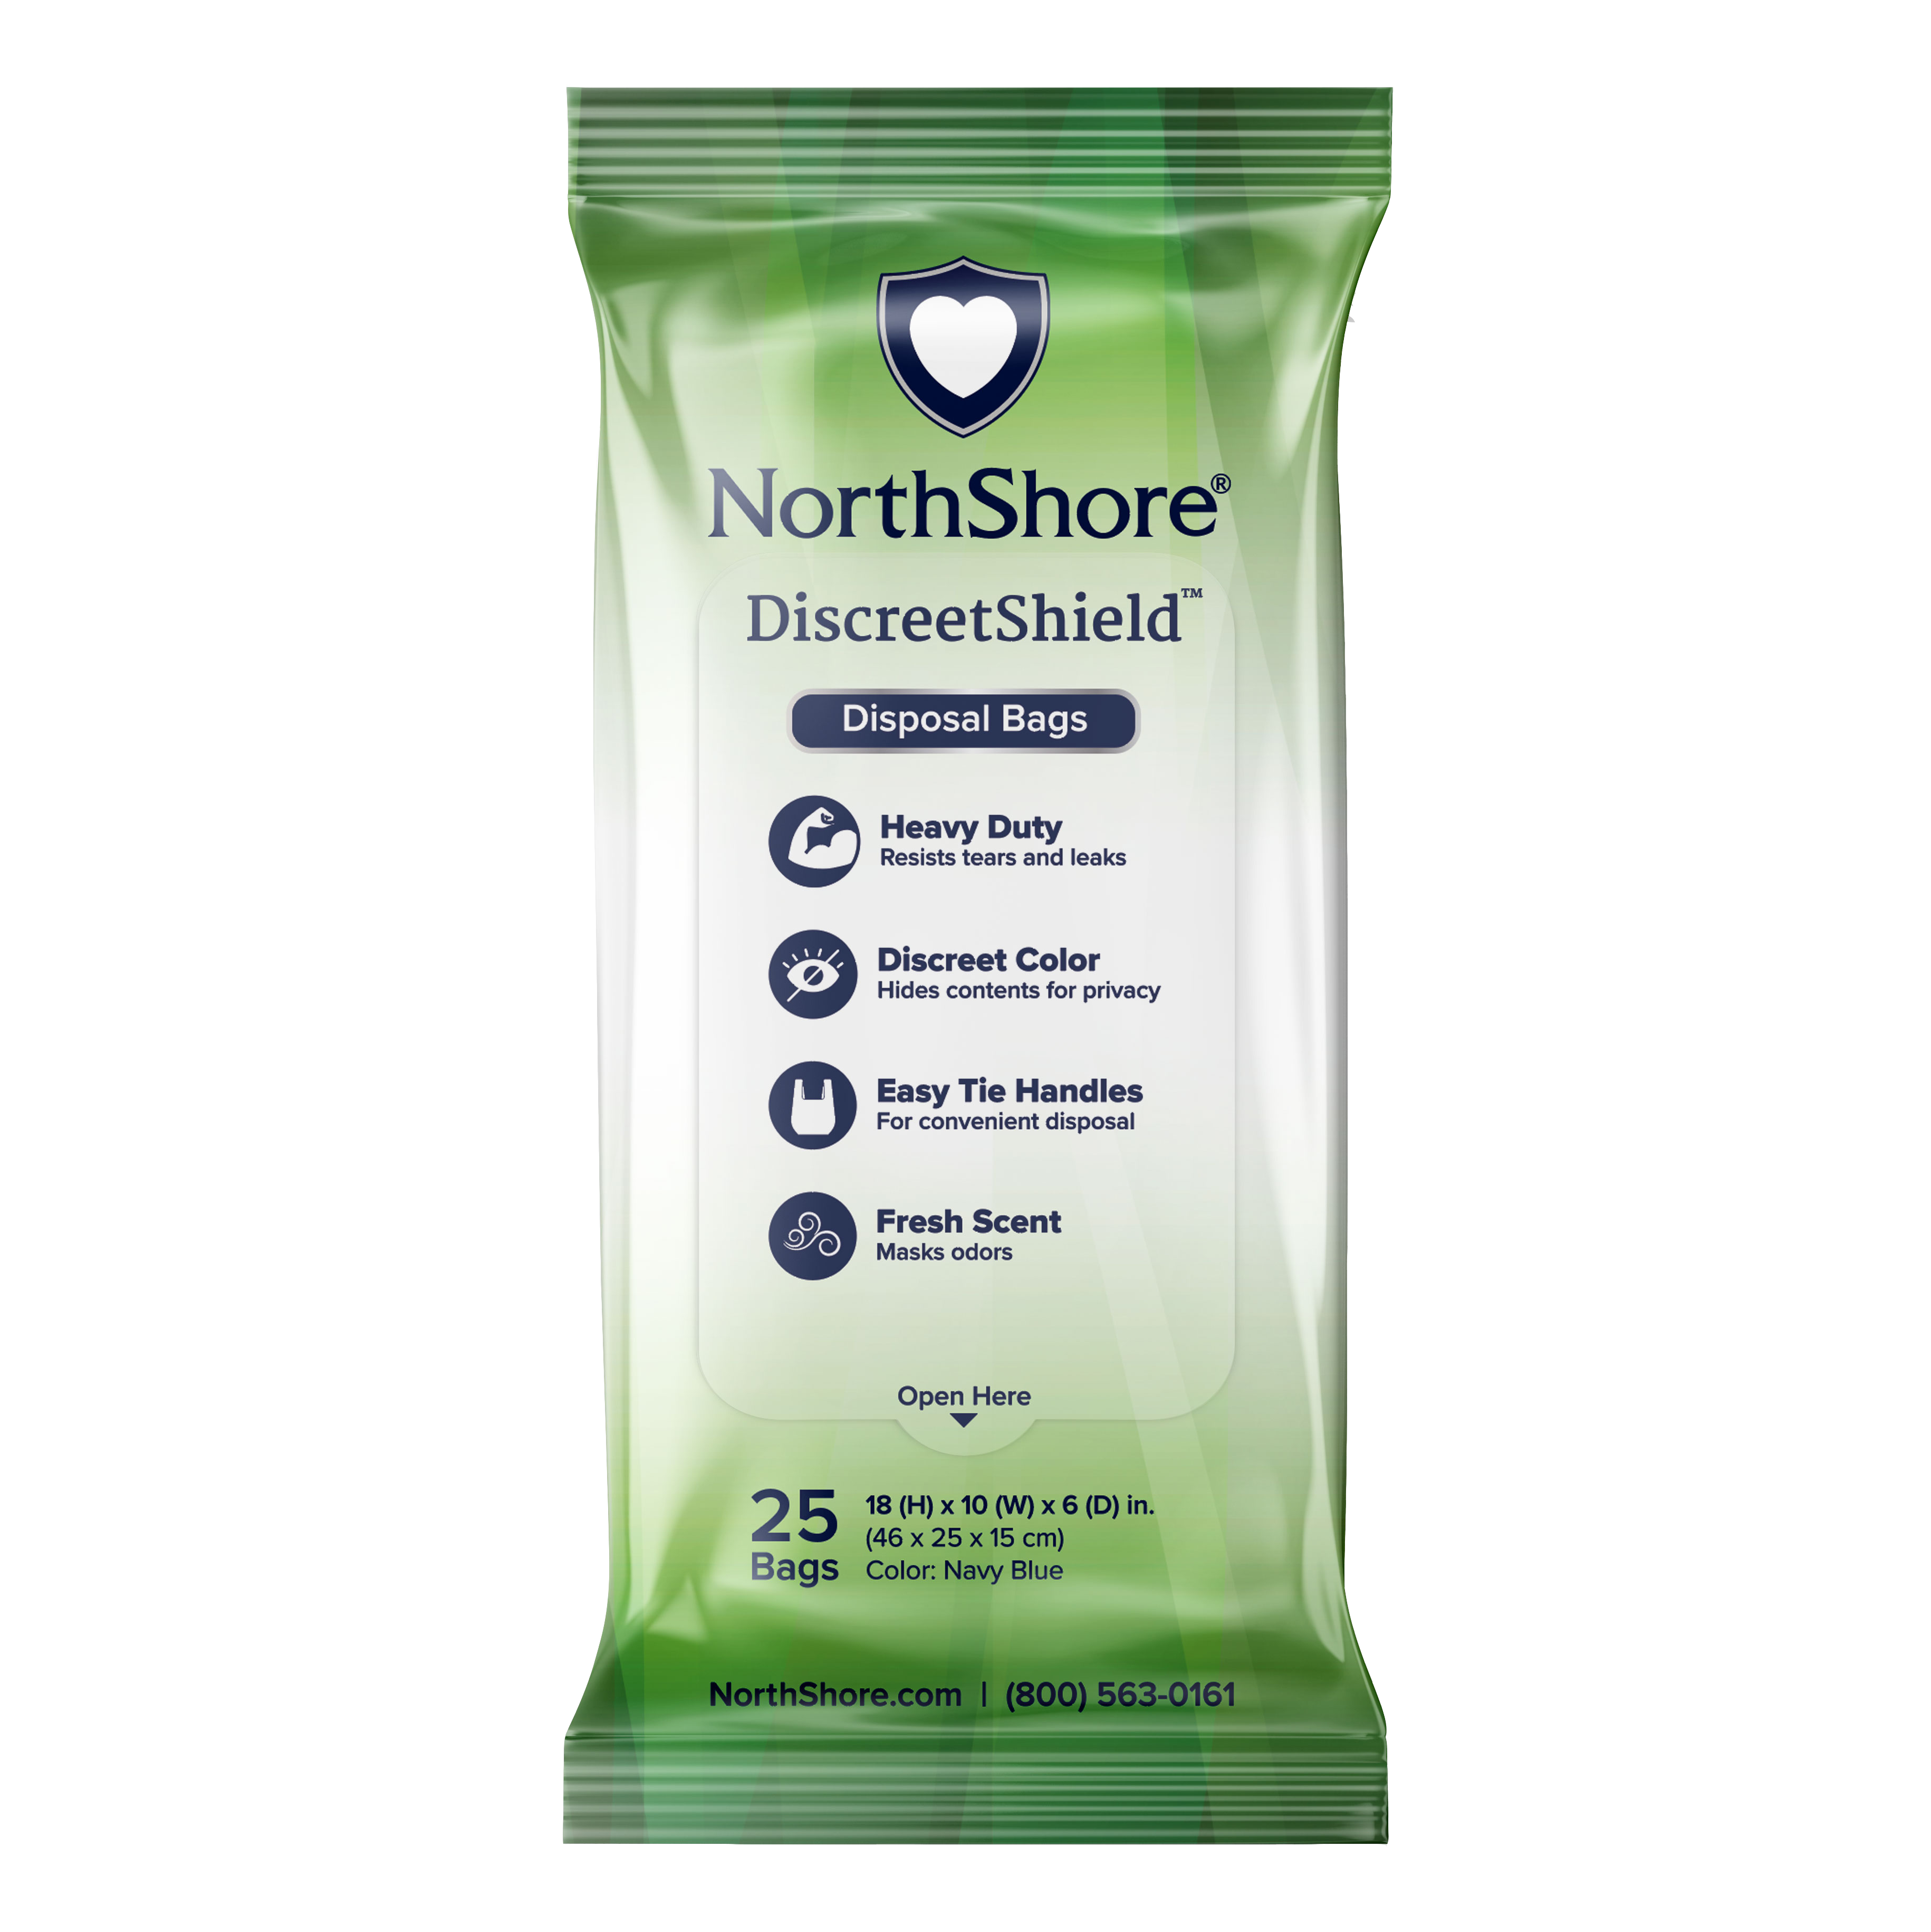 NorthShore DiscreetShield Disposal Bags